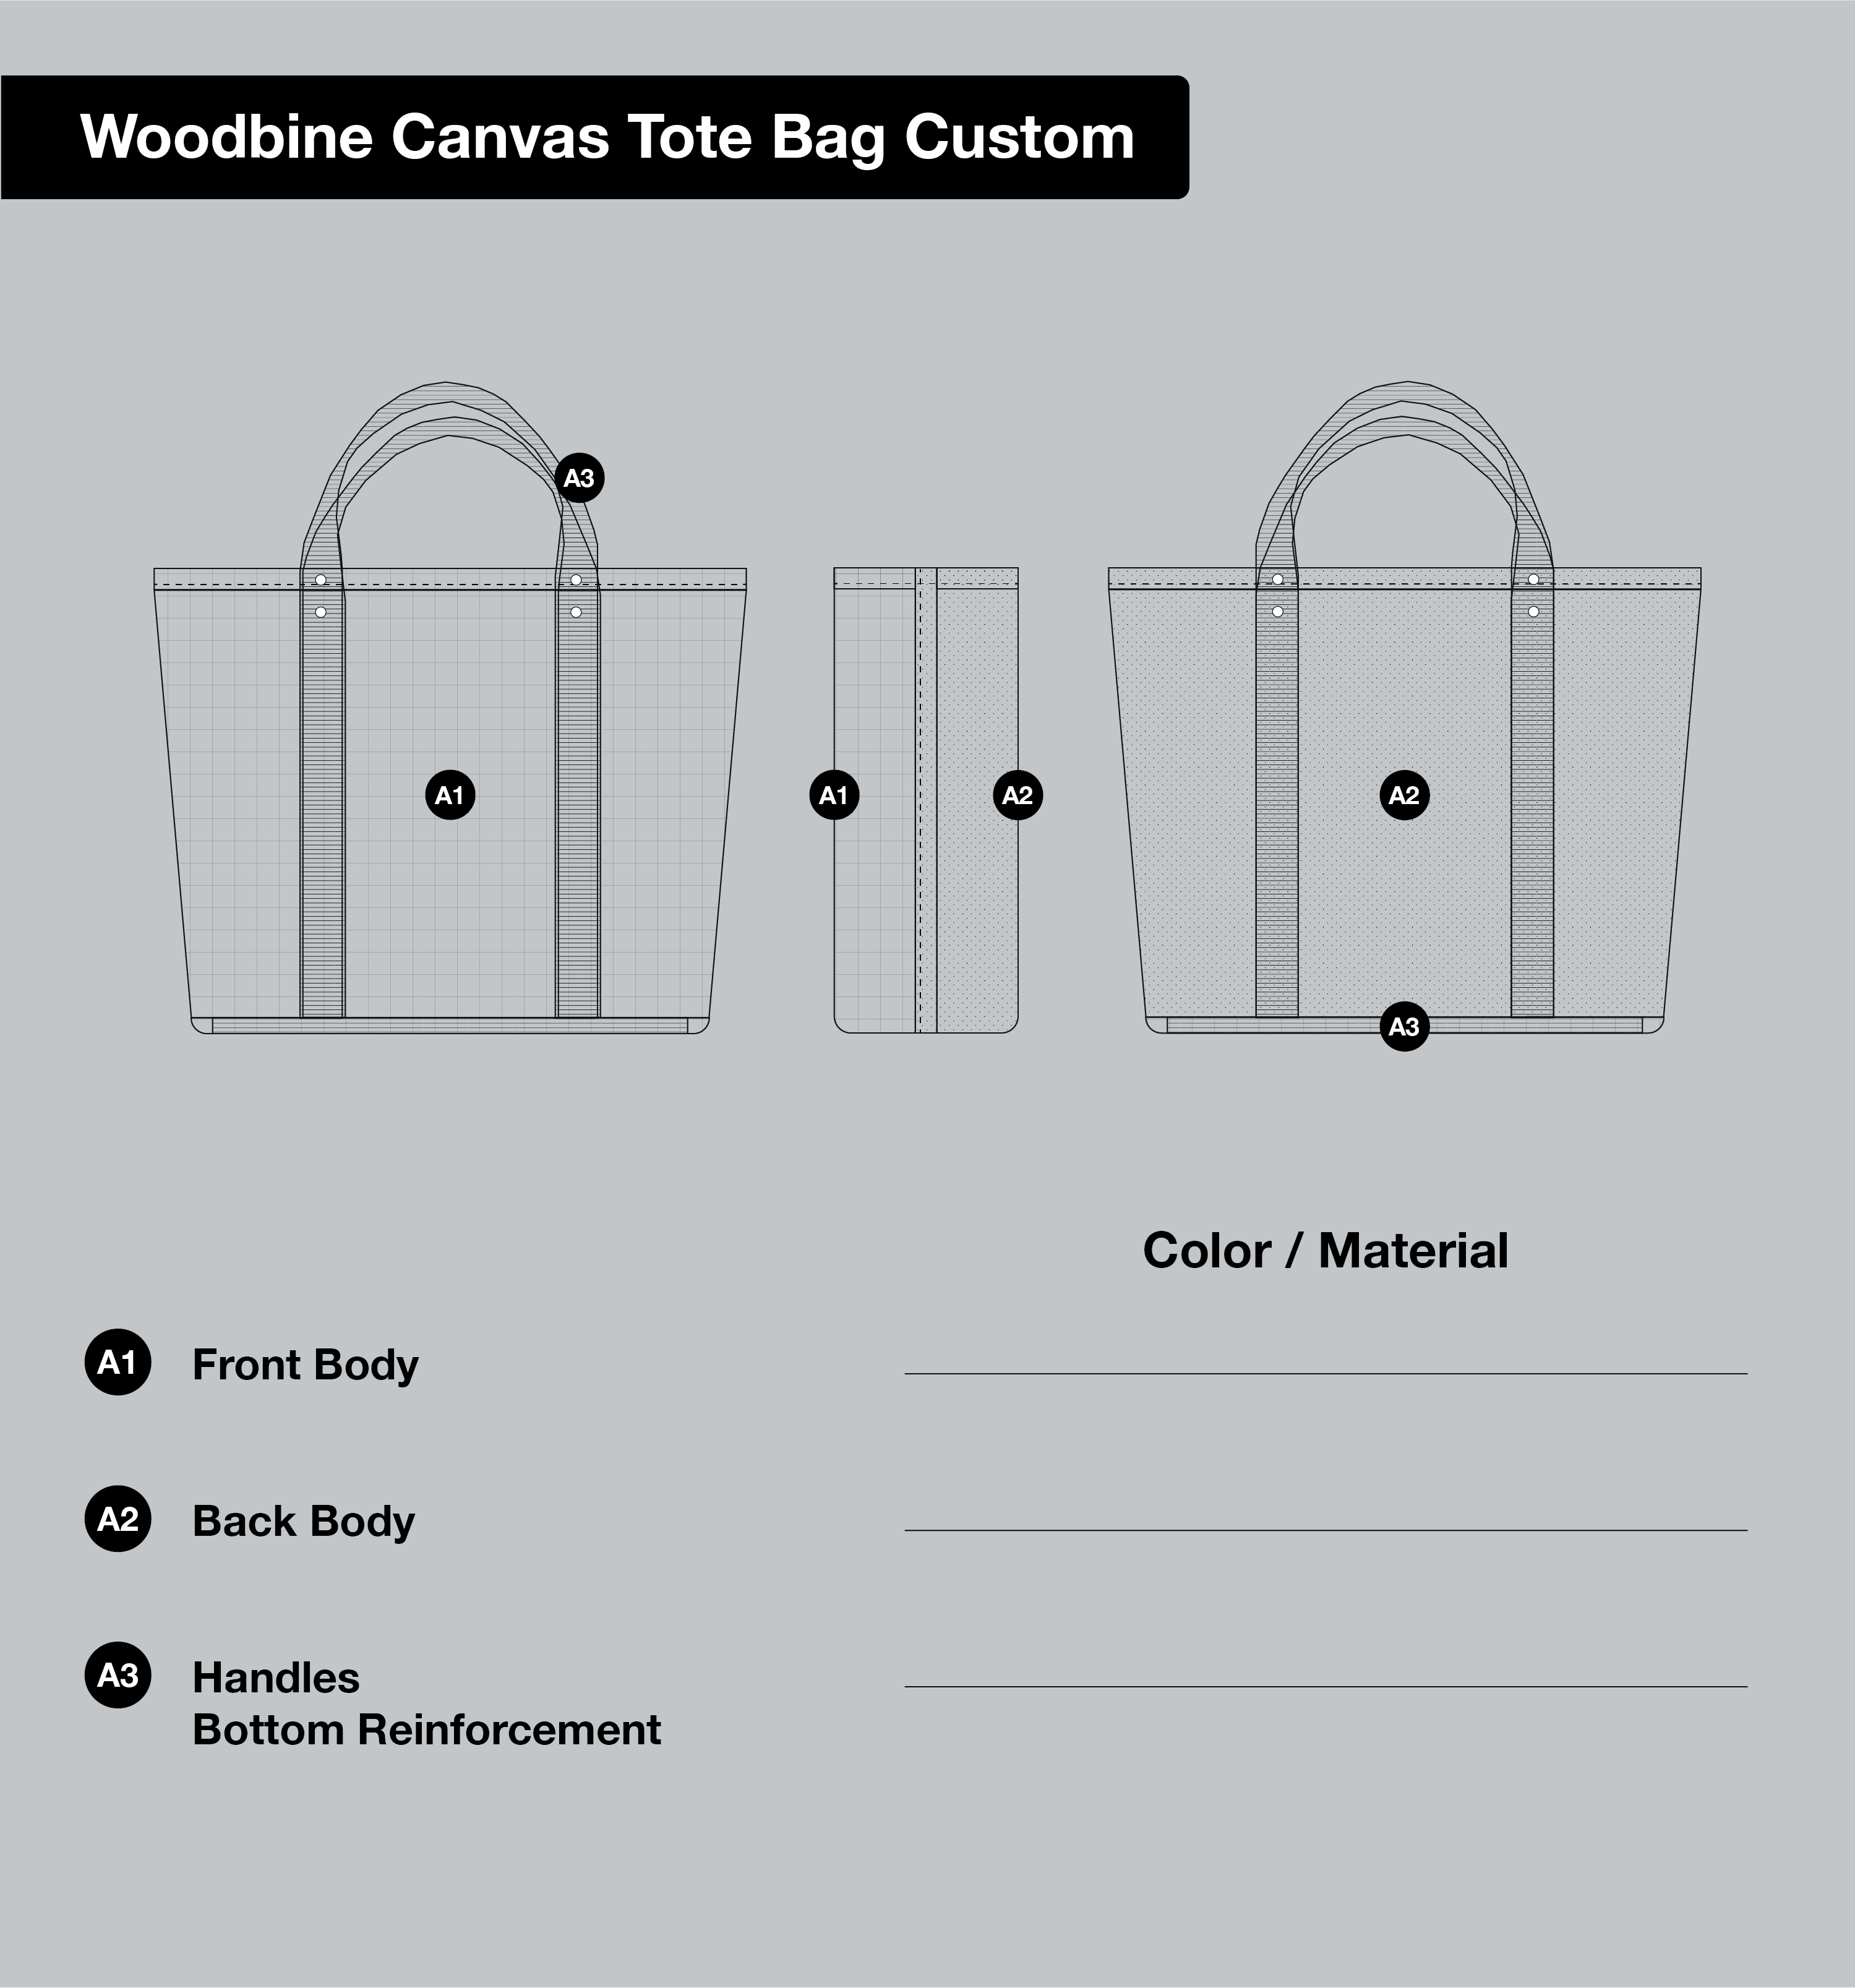 Woodbine Canvas Tote Bag Custom